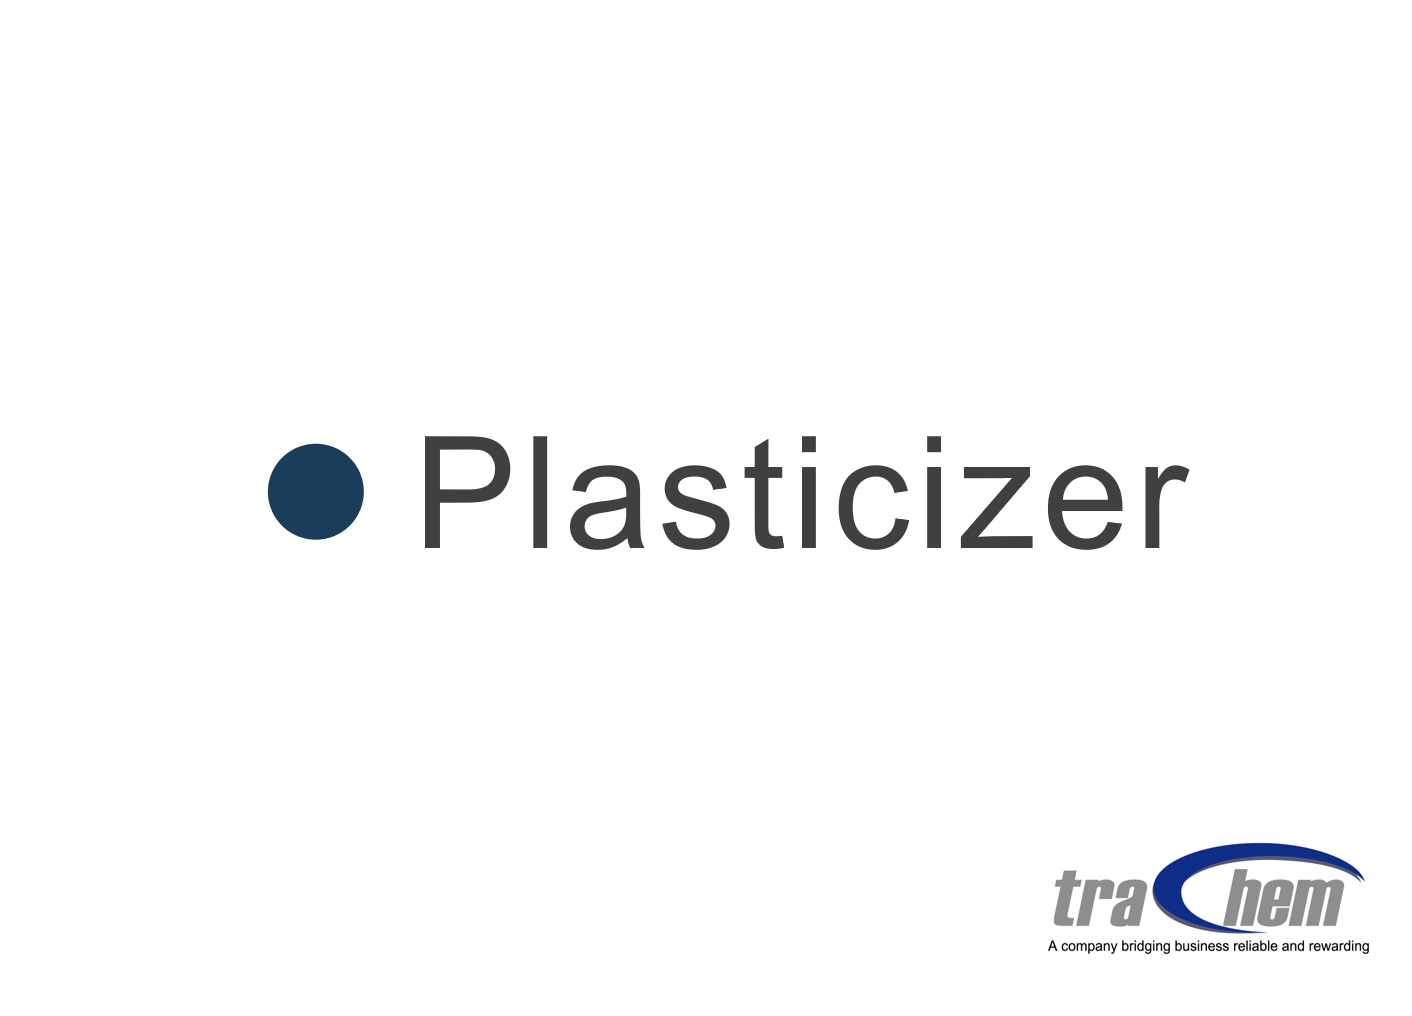 Plasticizer